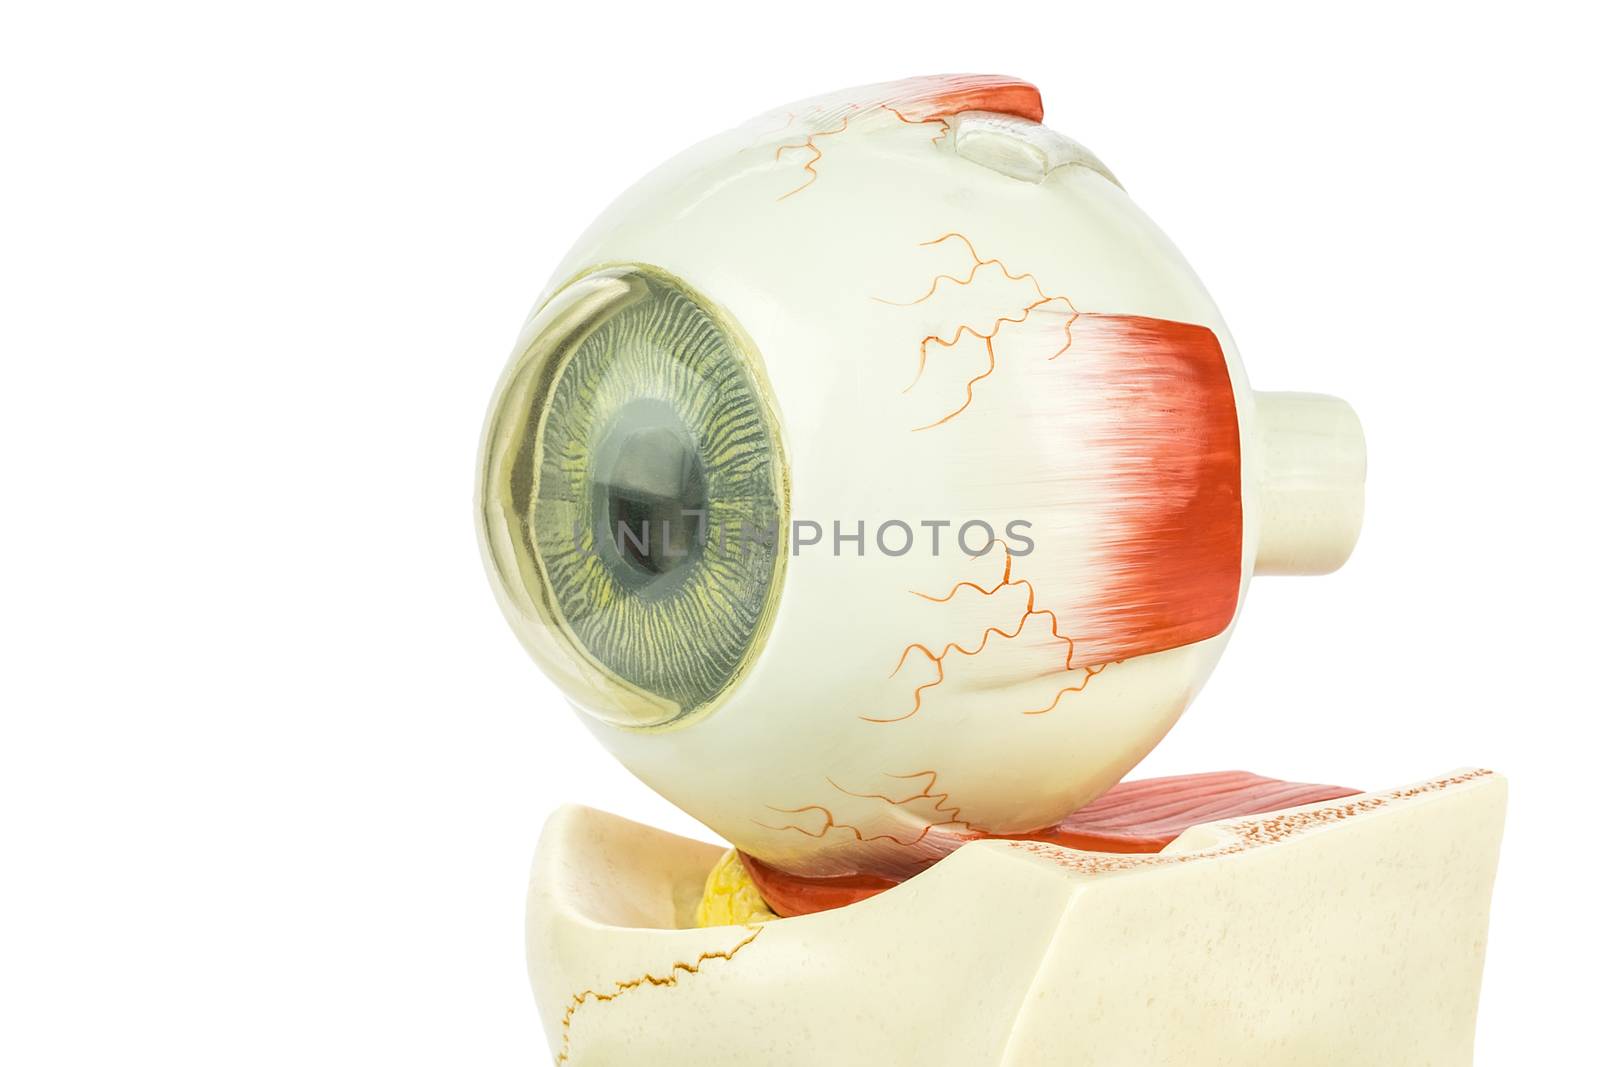 Artificial model of human eye by BenSchonewille